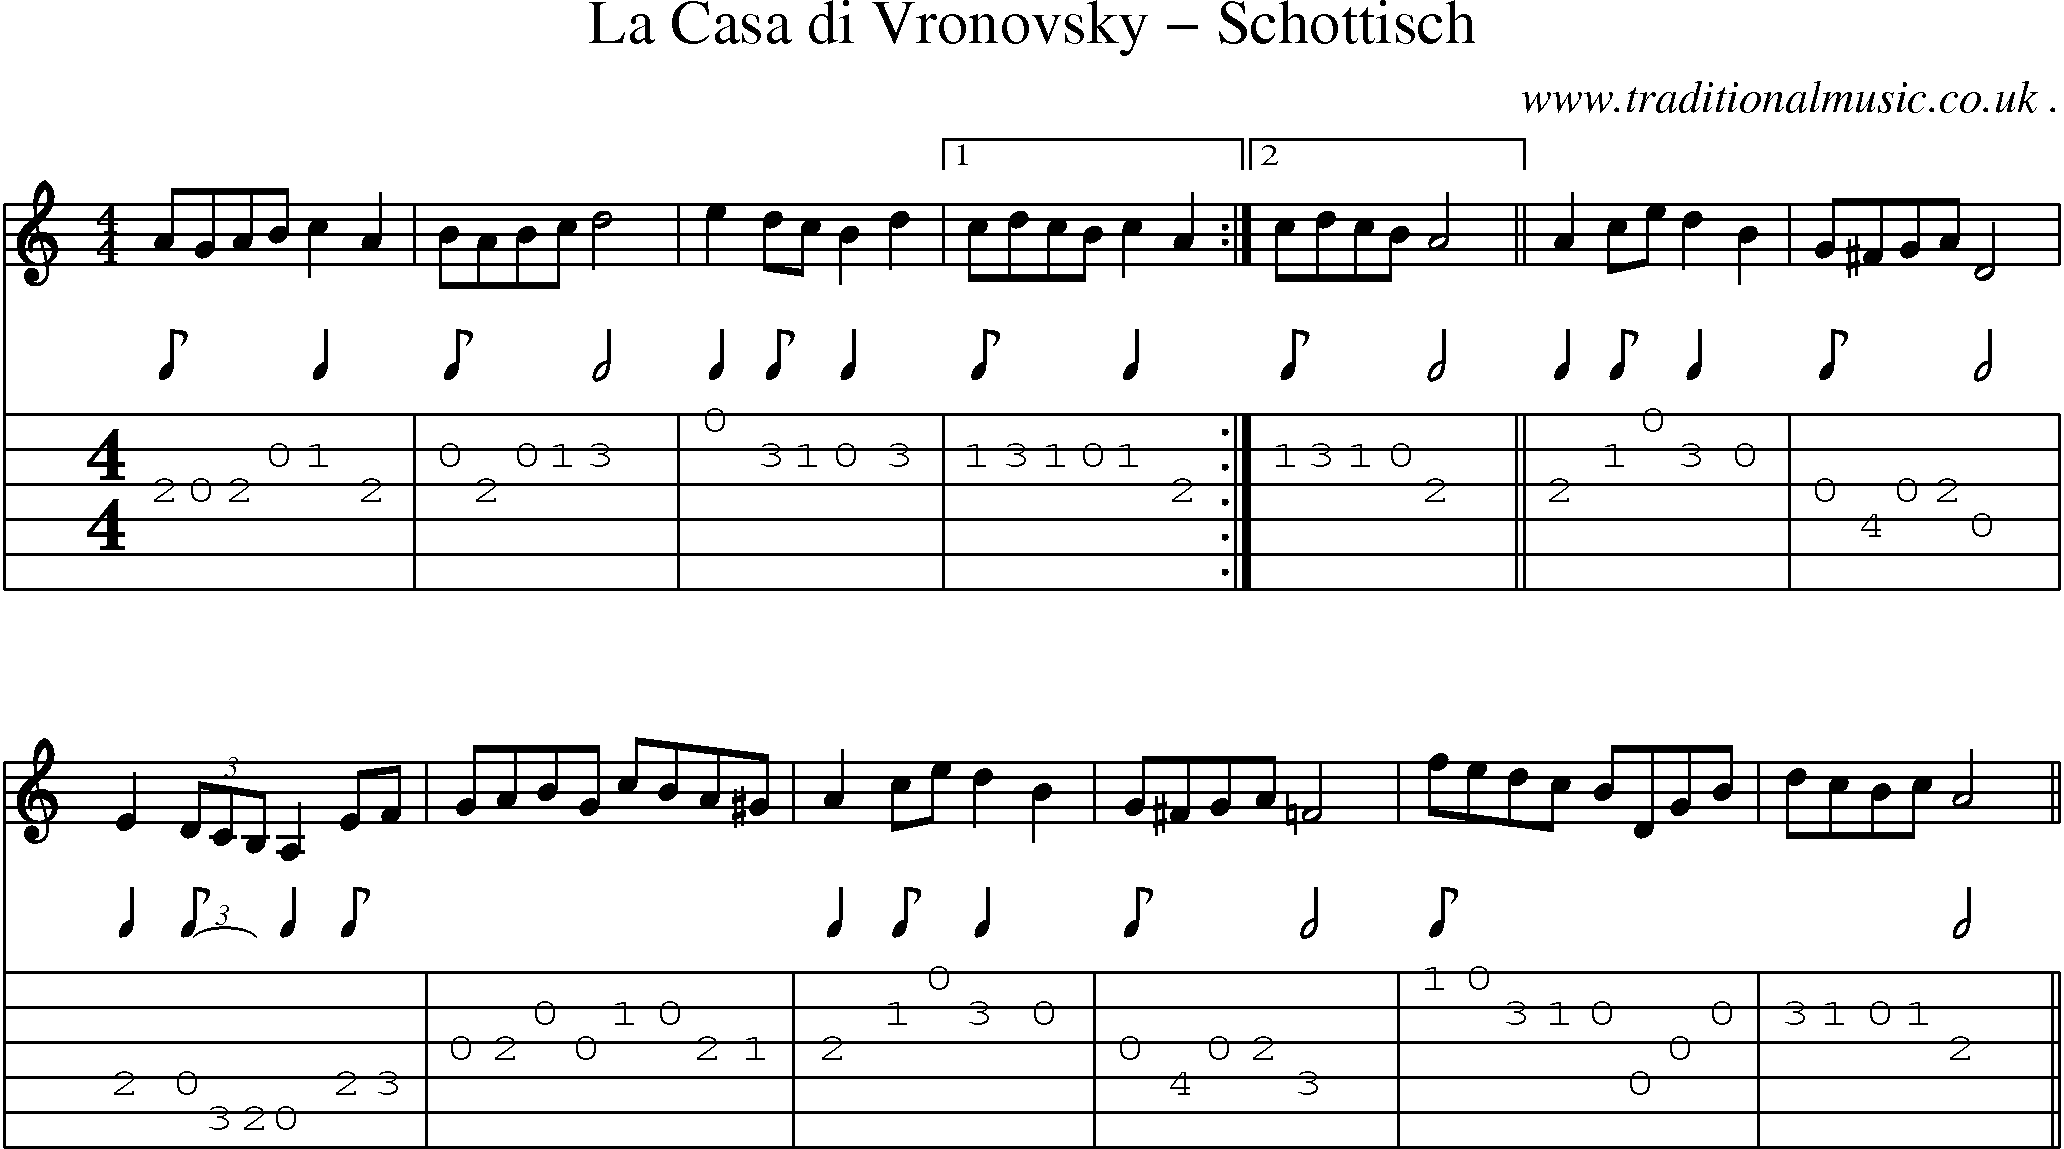 Sheet-Music and Guitar Tabs for La Casa Di Vronovsky Schottisch